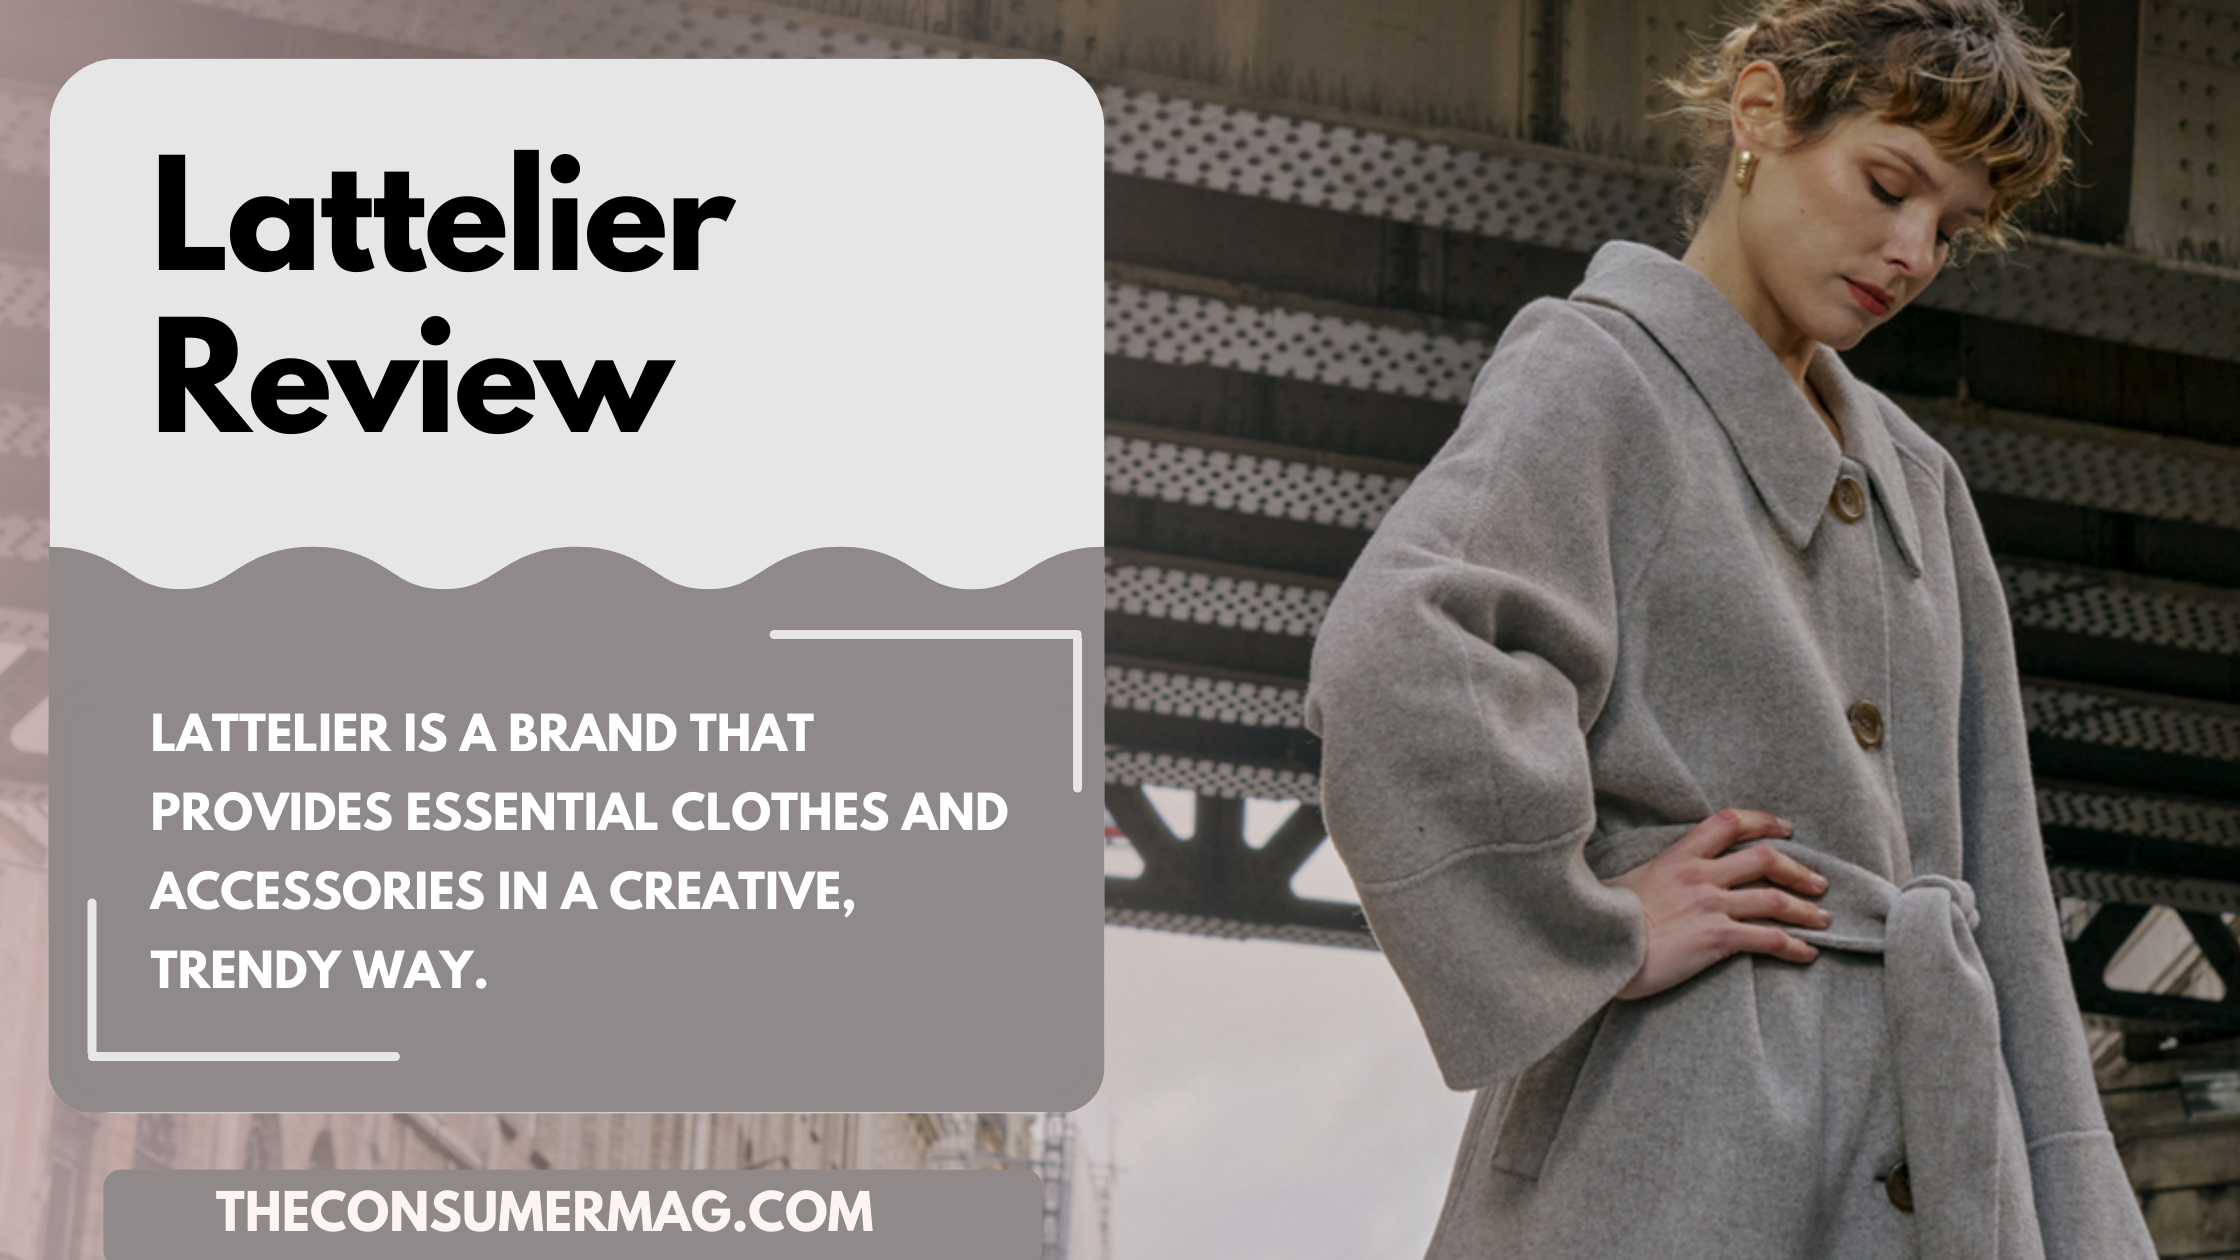 Lattelier Review | Read Lattelier Reviews and Shop The Latest Trends|